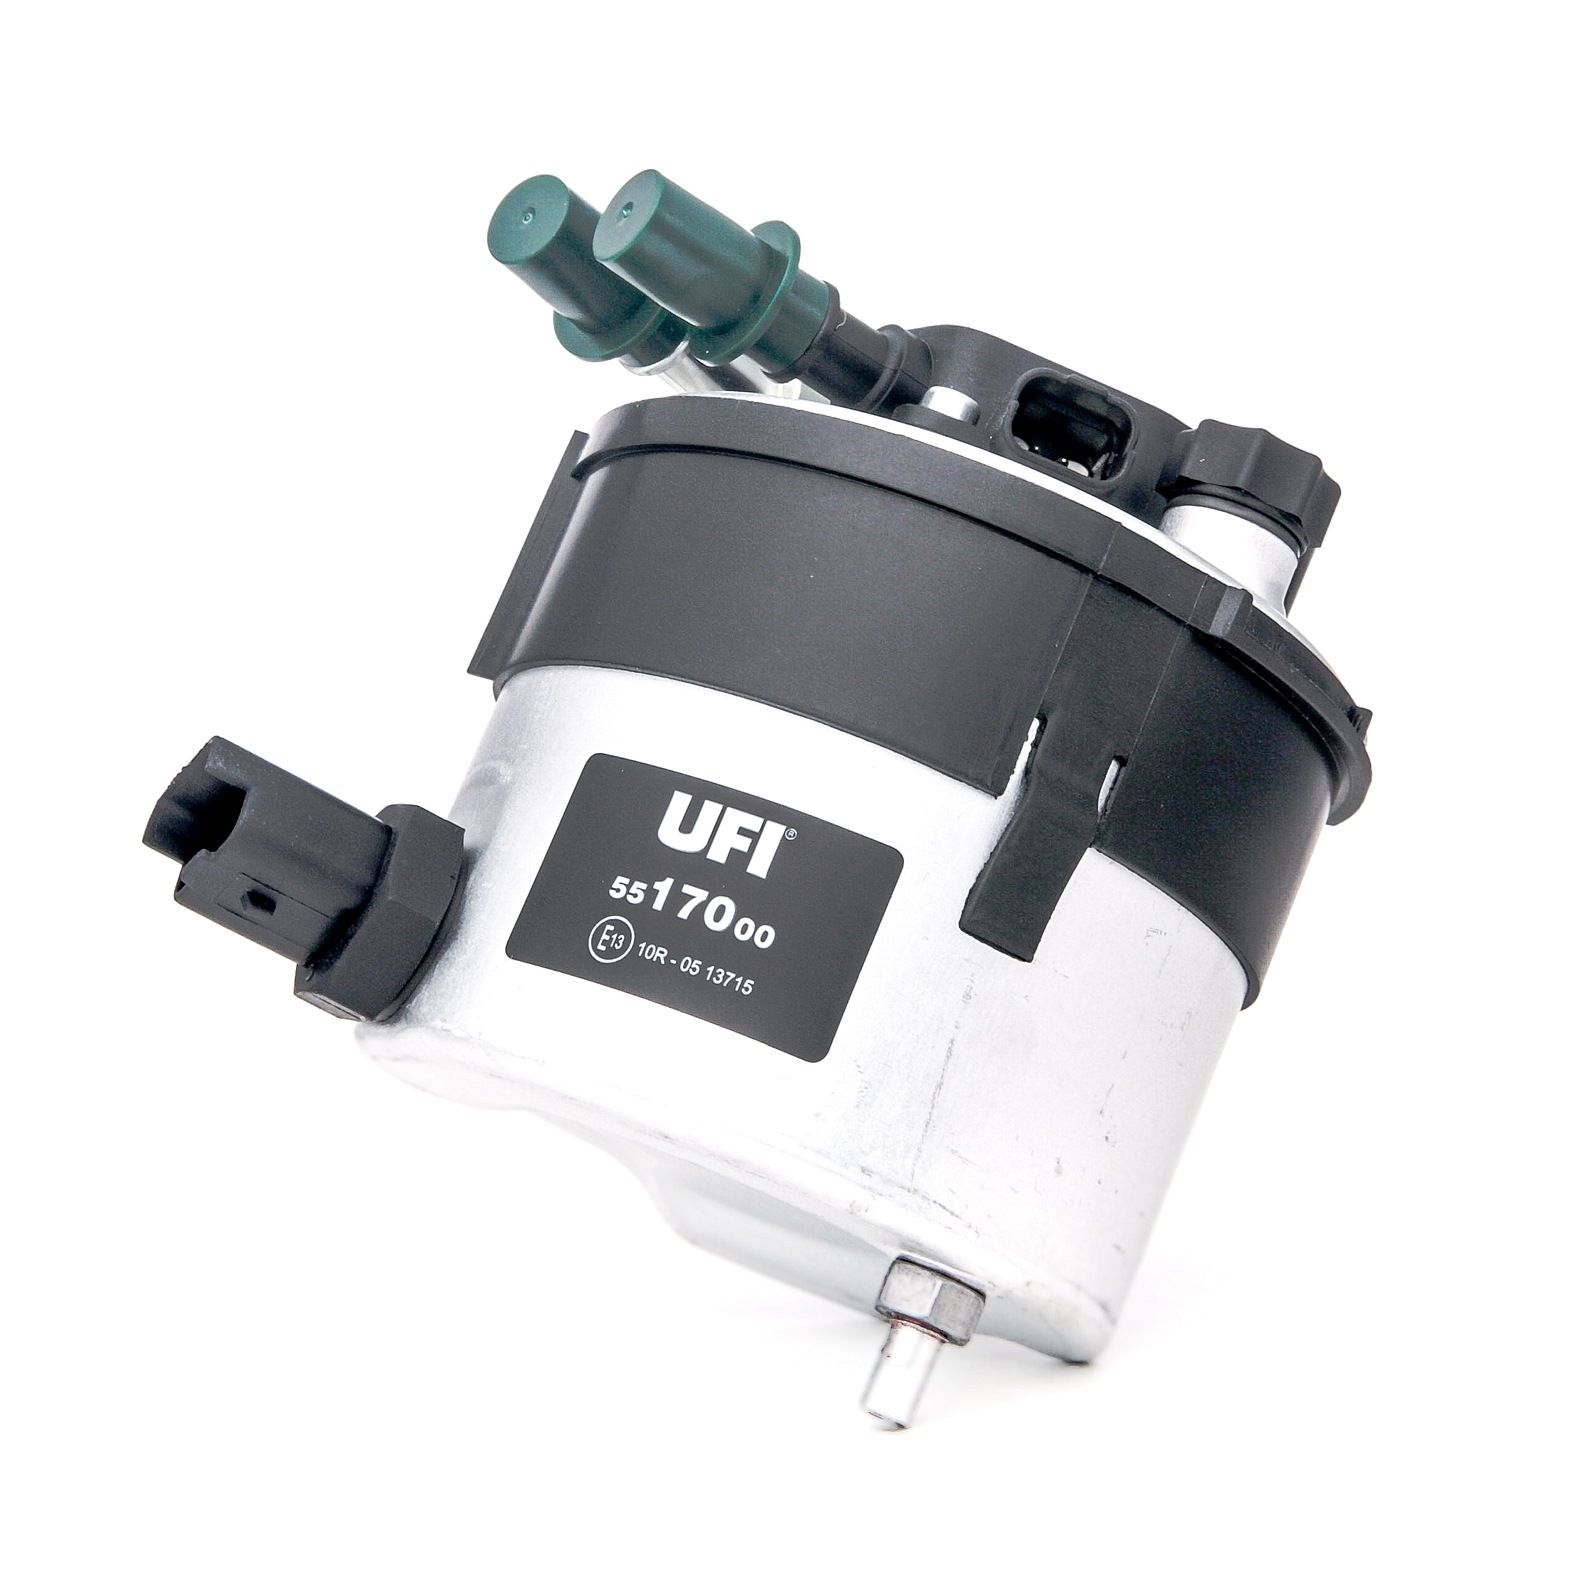 UFI 55.170.00 originali FORD FOCUS 2021 Filtro carburante Cartuccia filtro, 10mm, 10mm